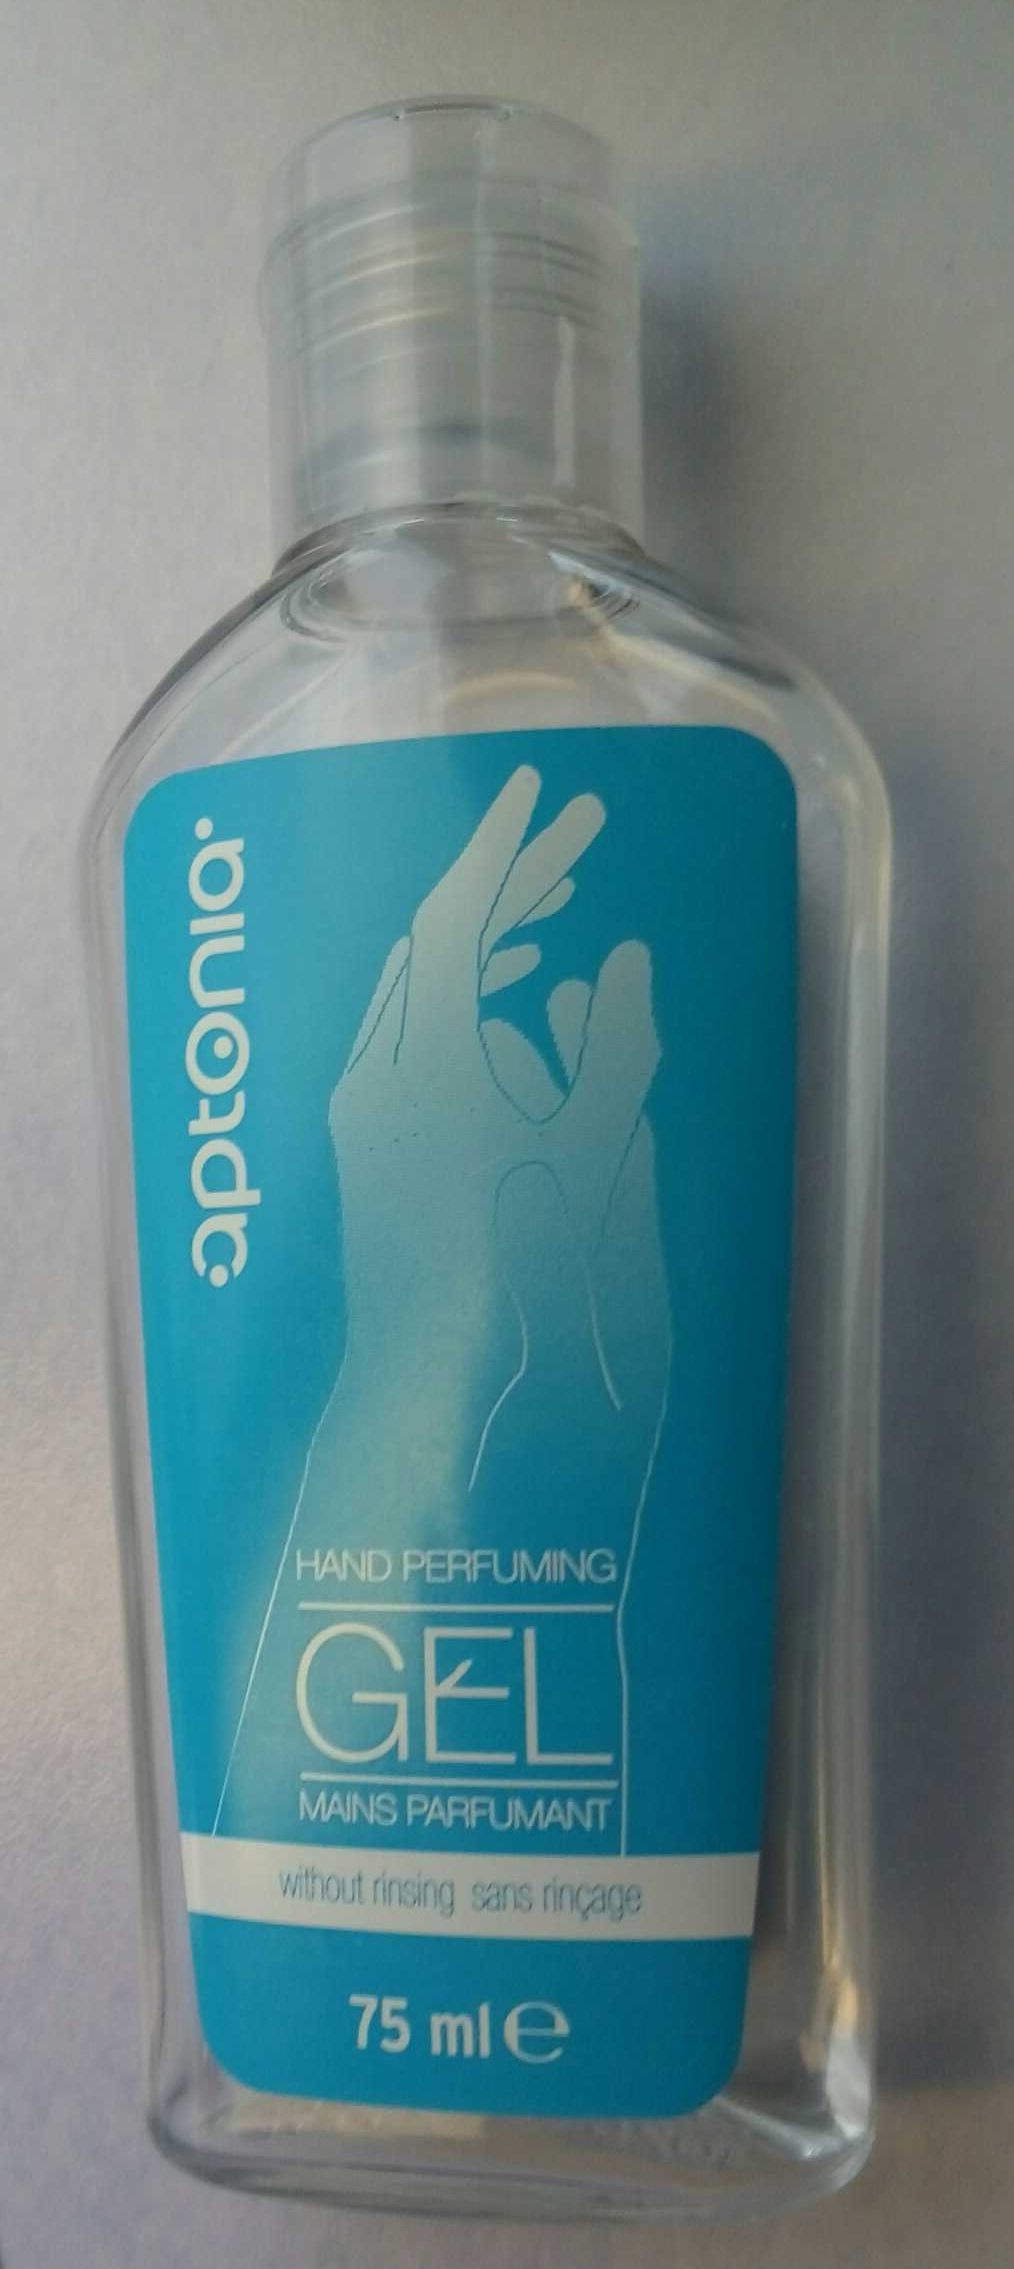 Gel mains parfumant - Produto - fr